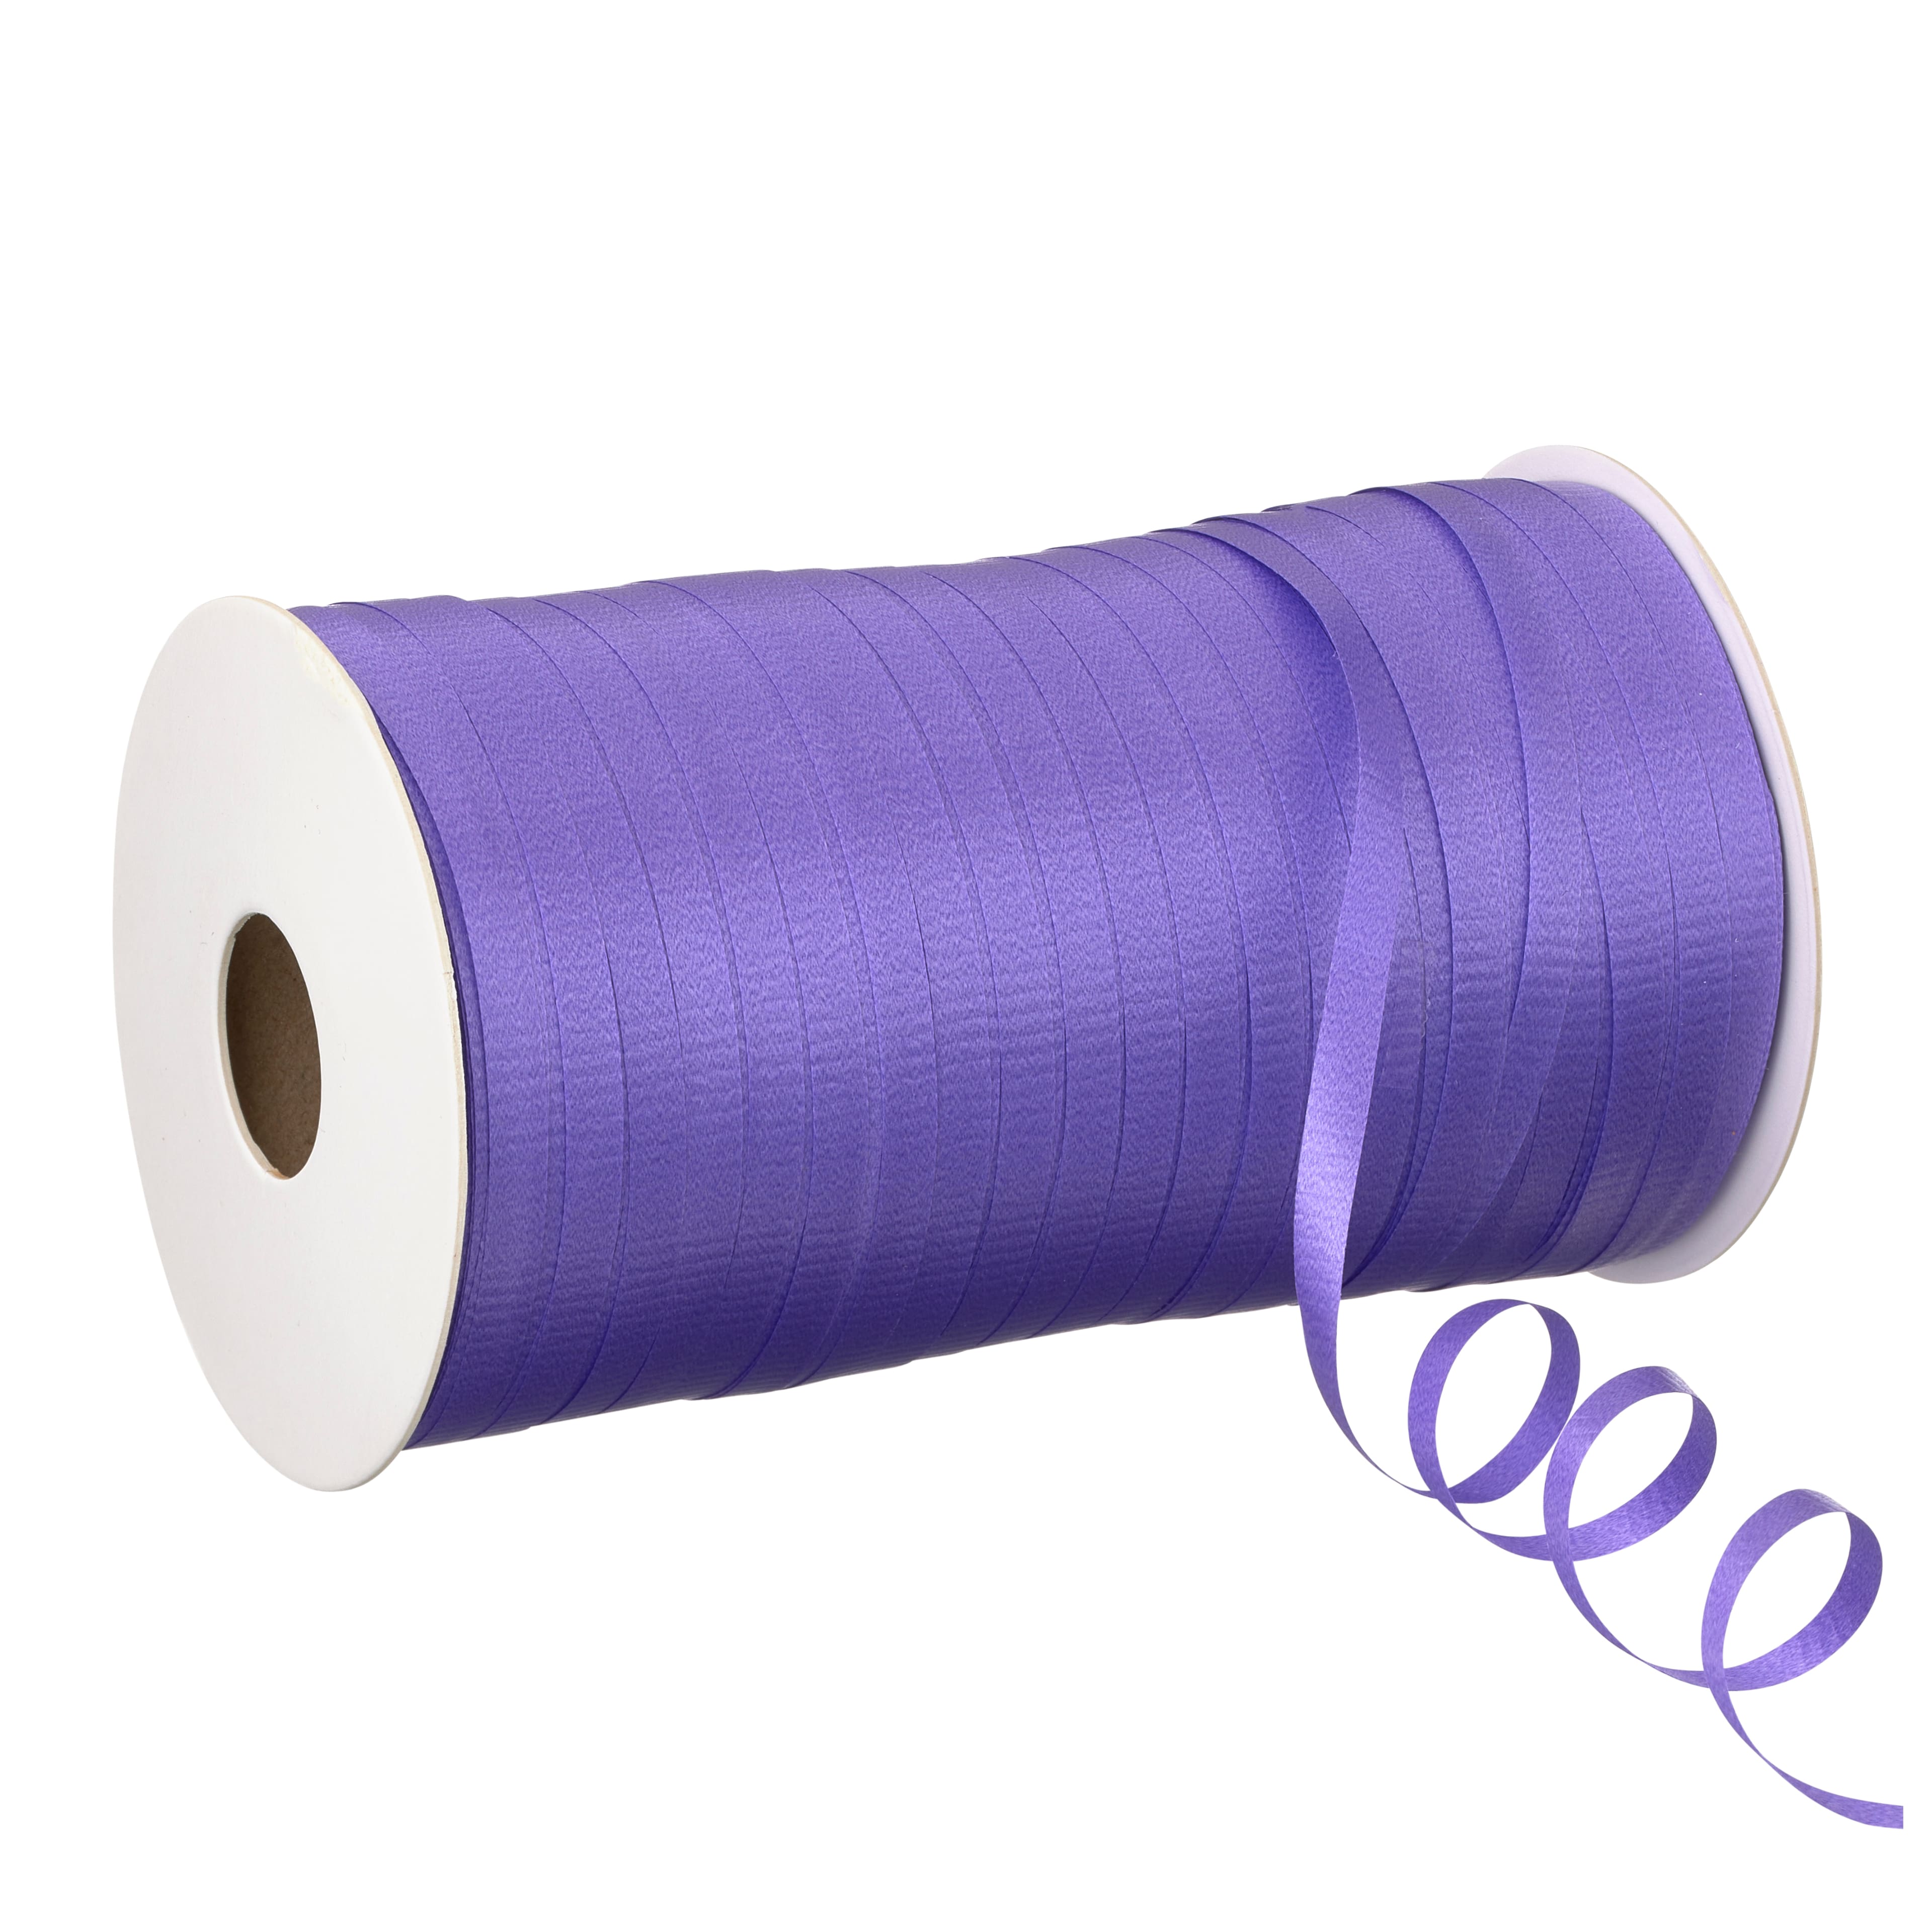 Lilac Curling Ribbon Spool